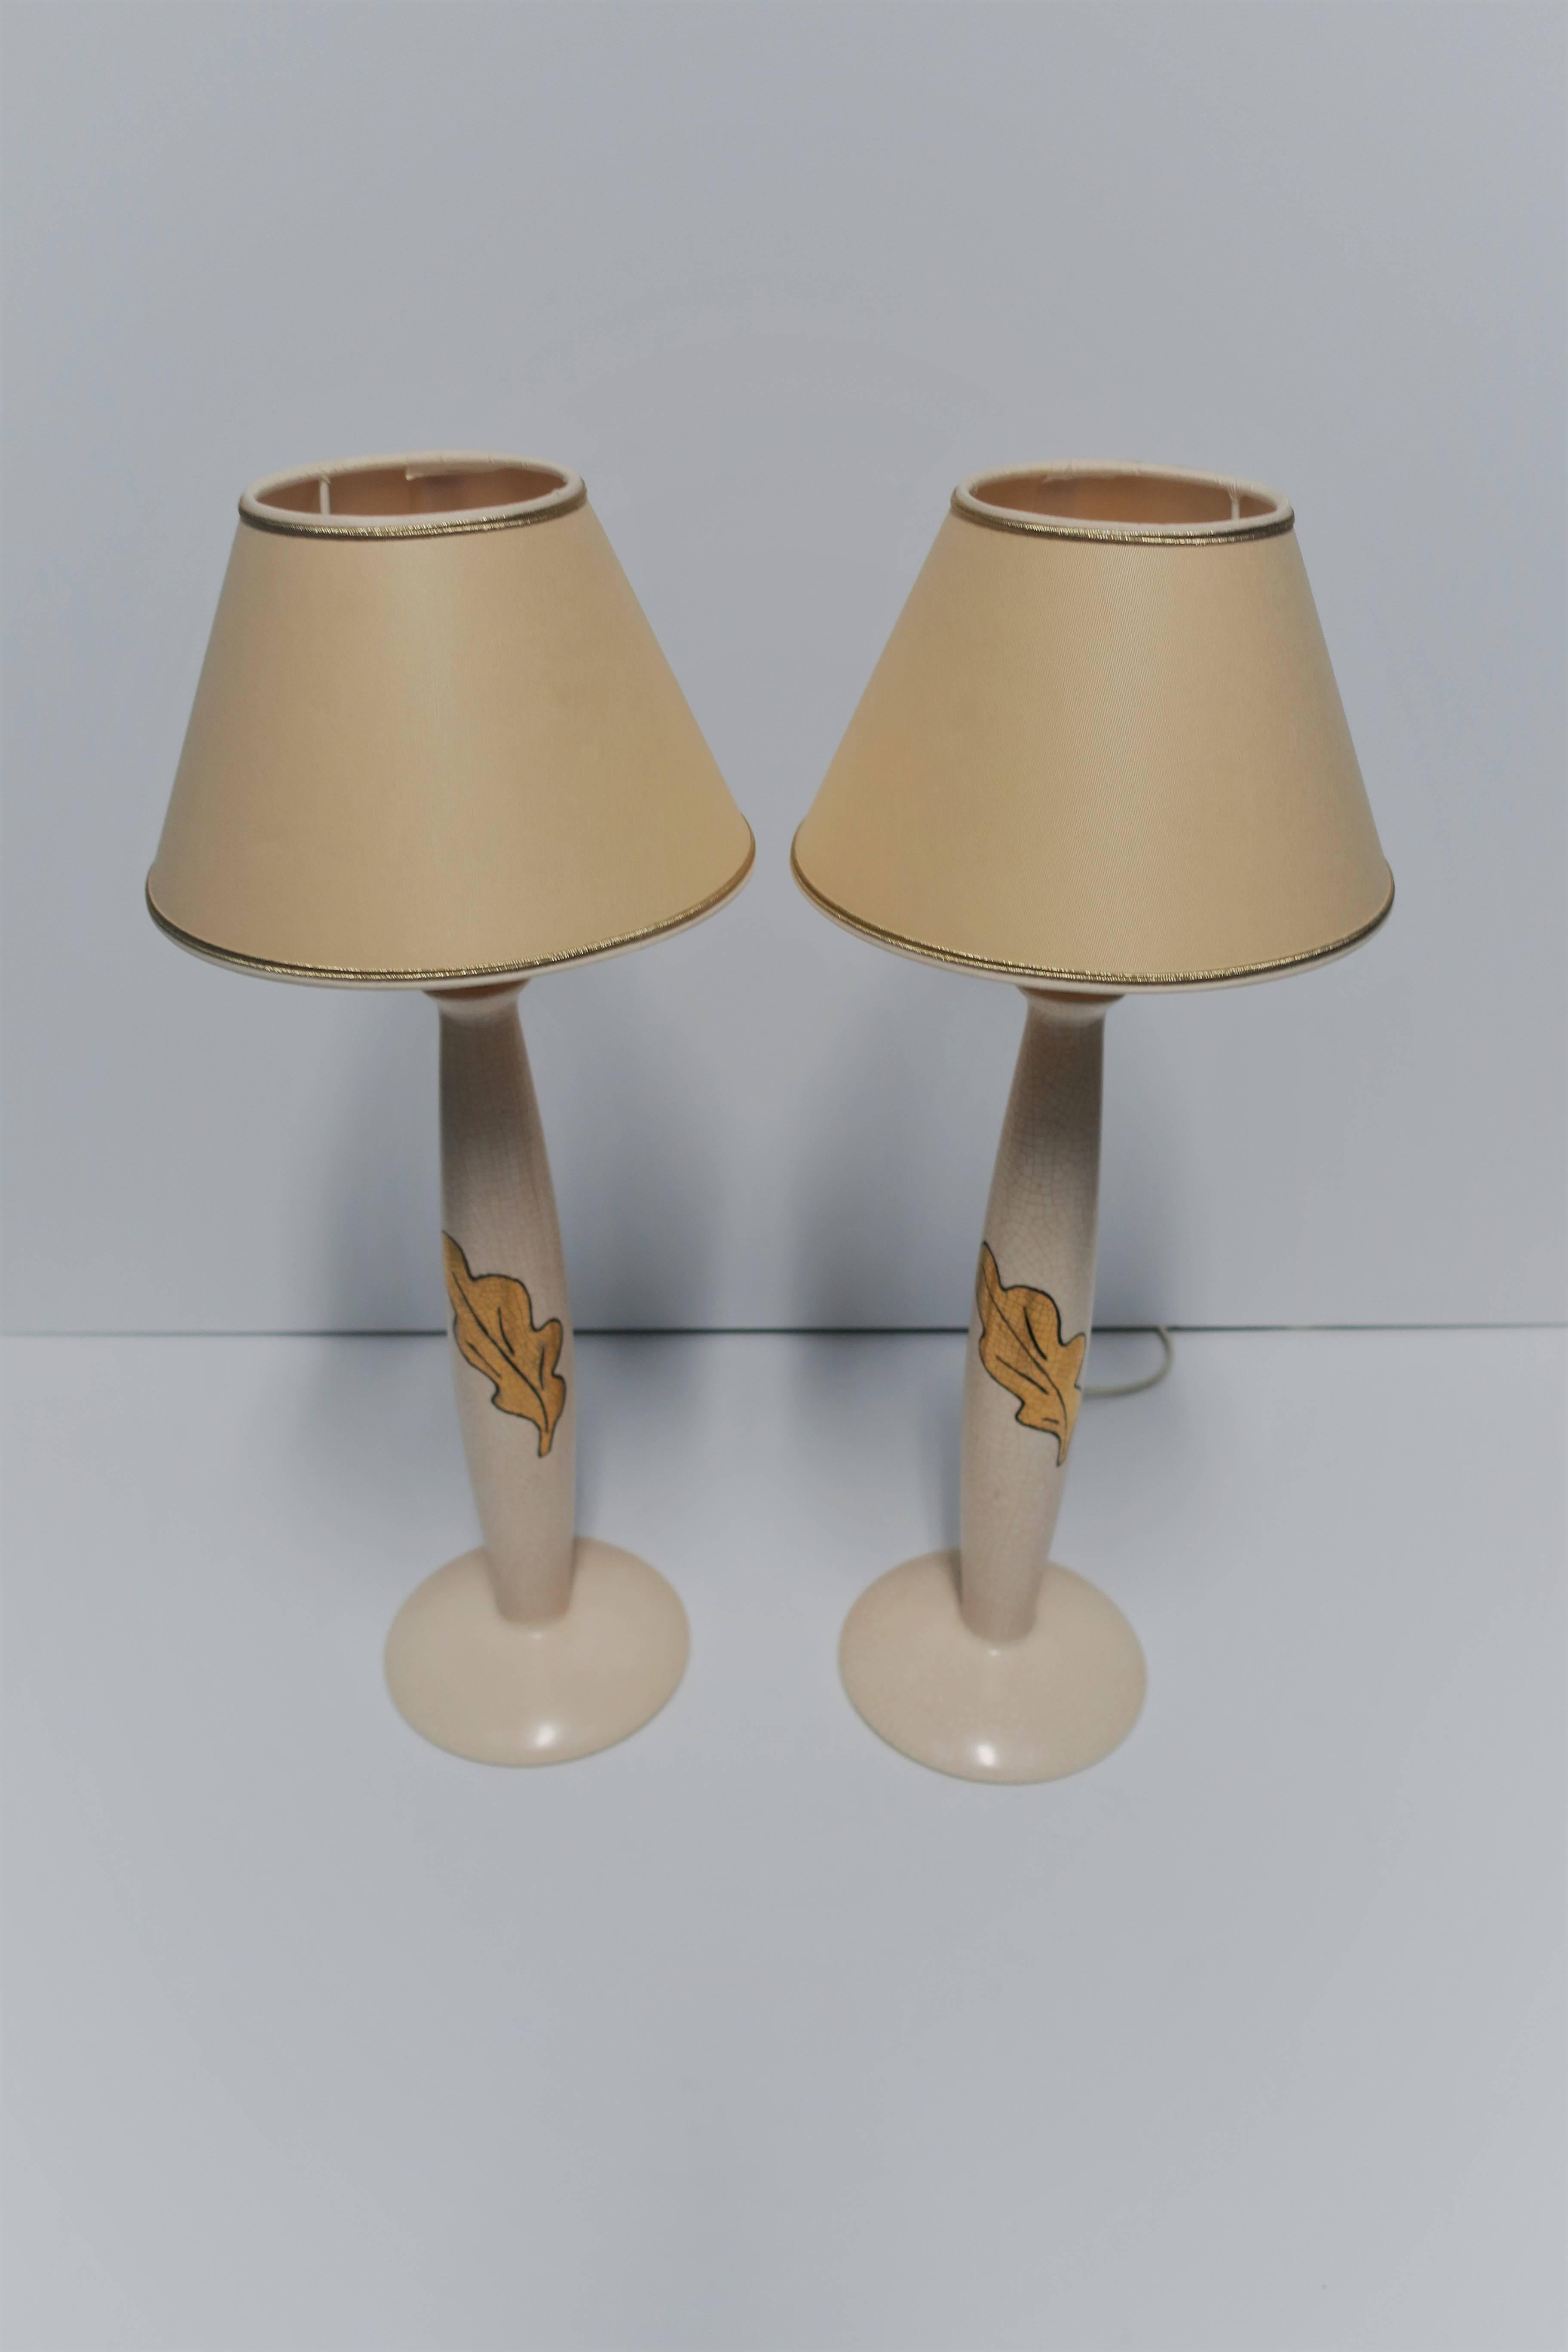 french ceramic lamp